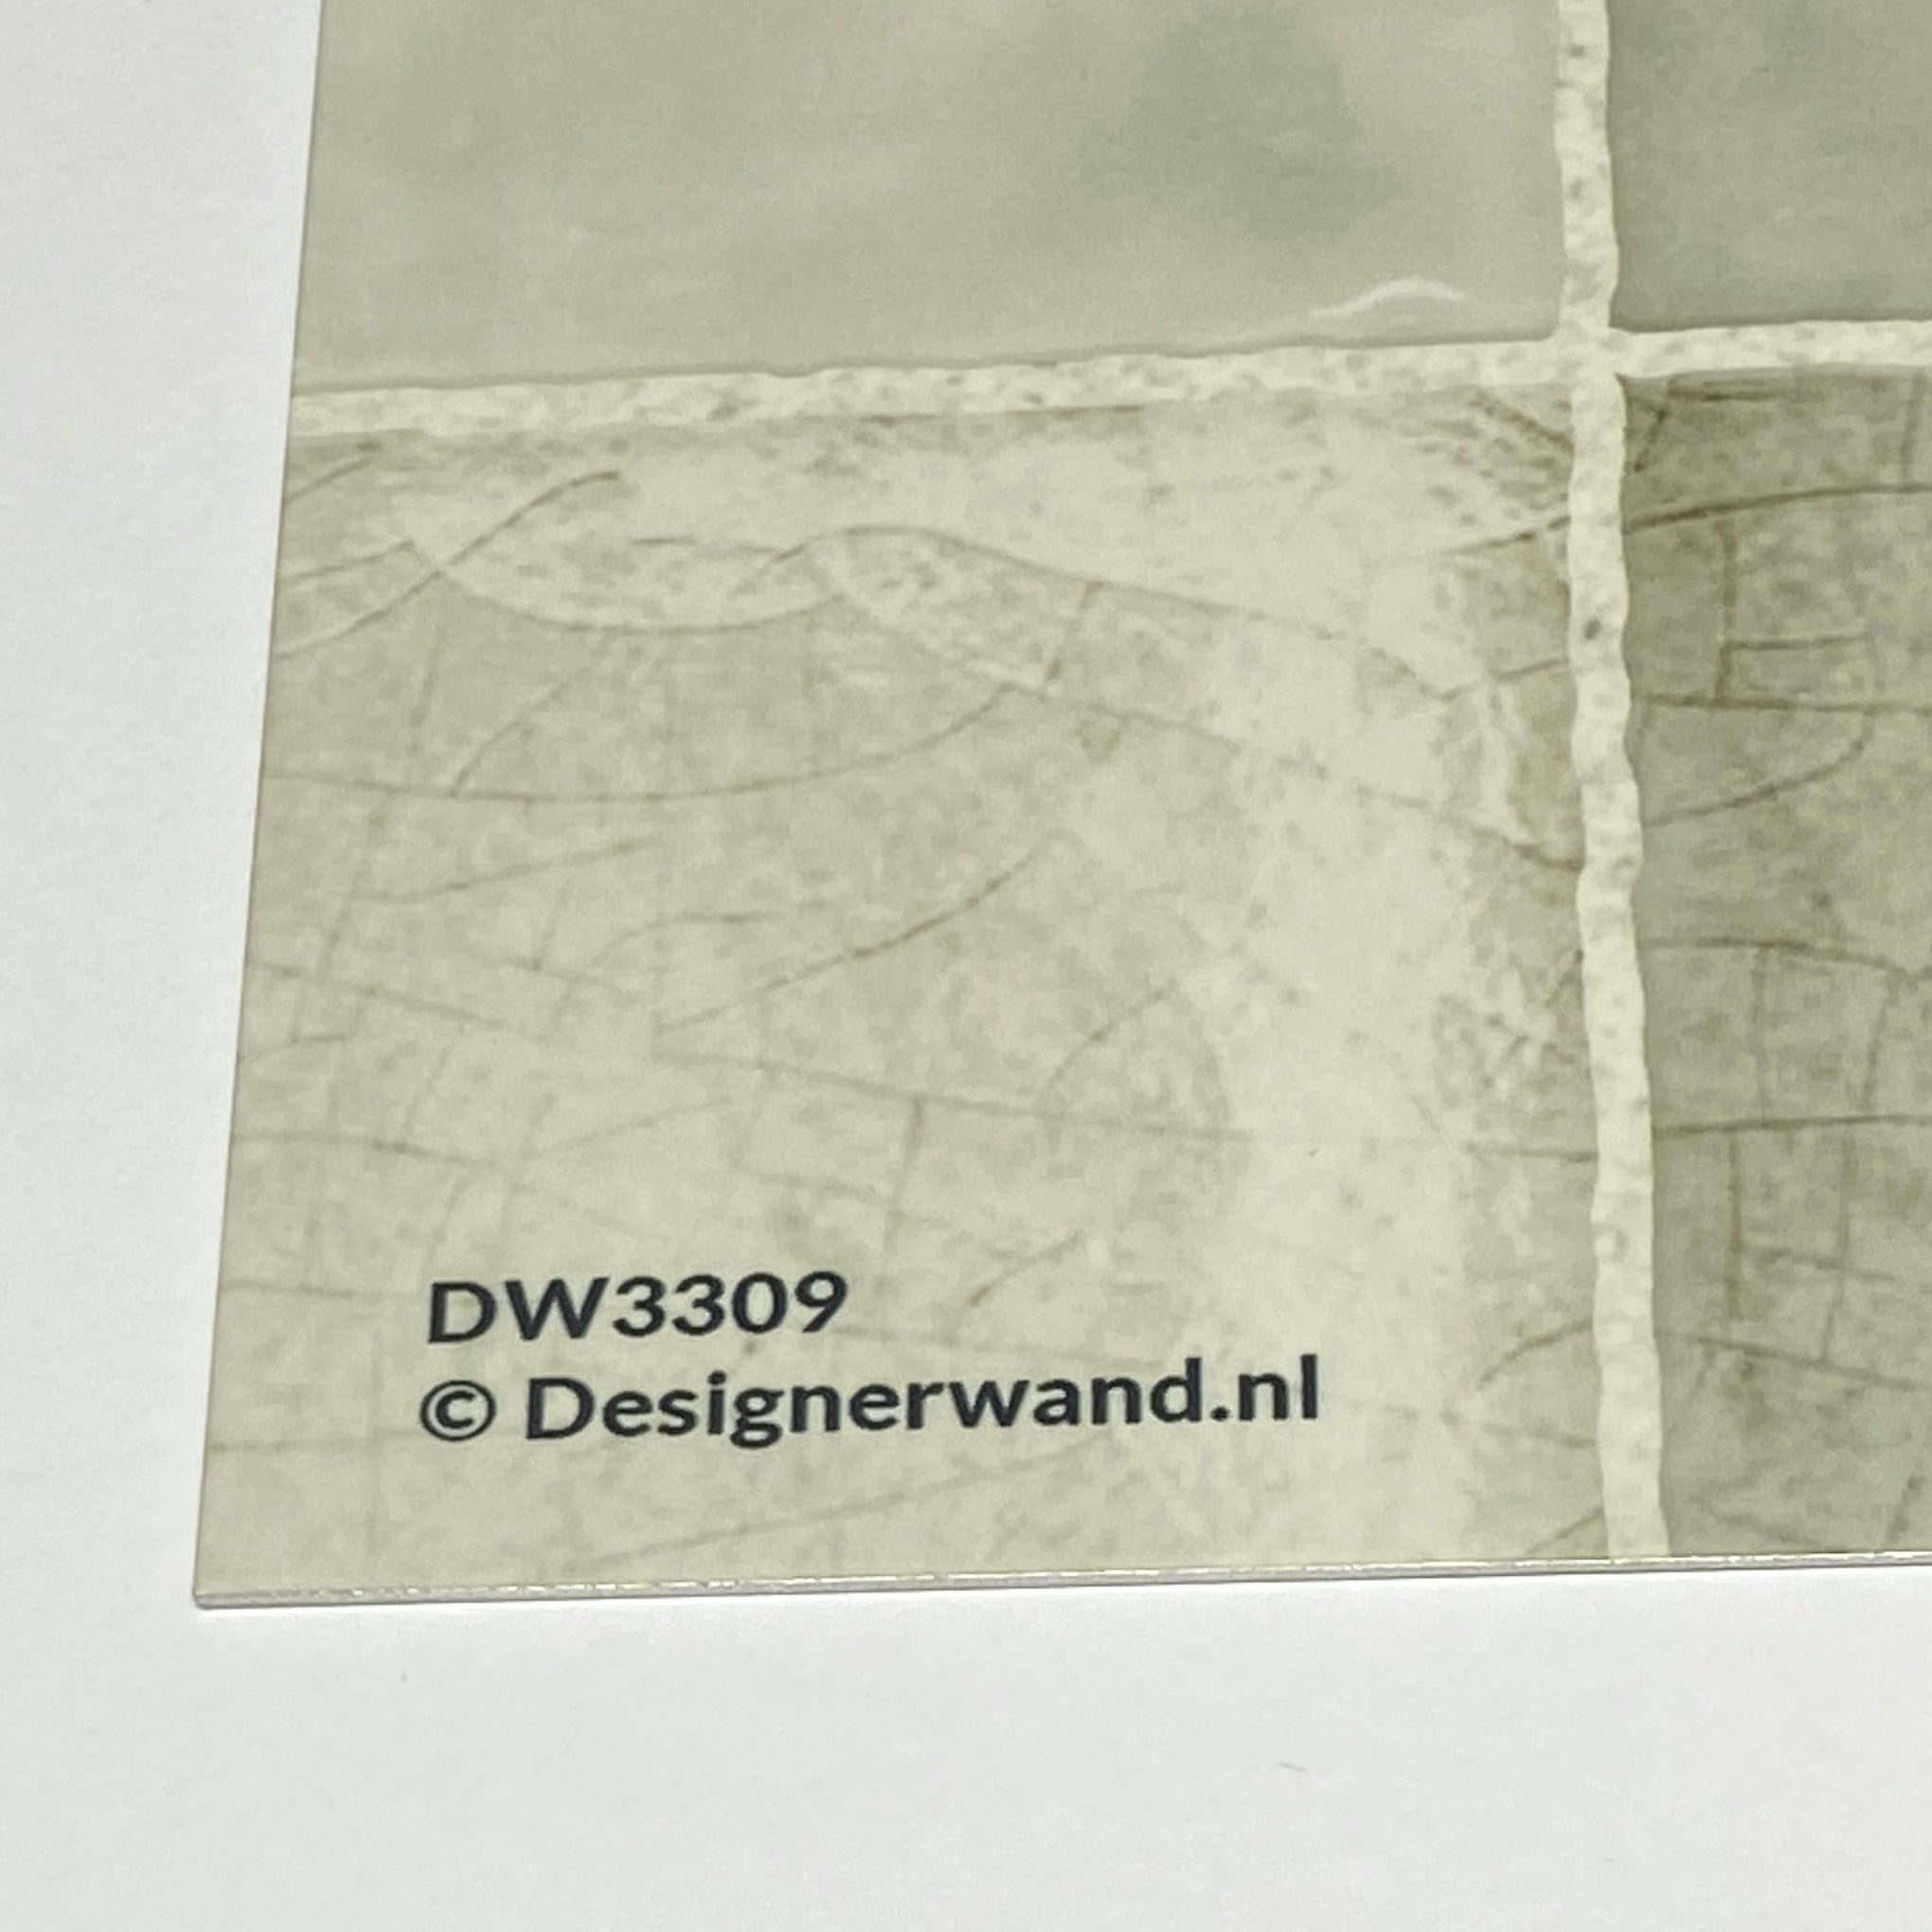 DW3309 - DW Solid Sample